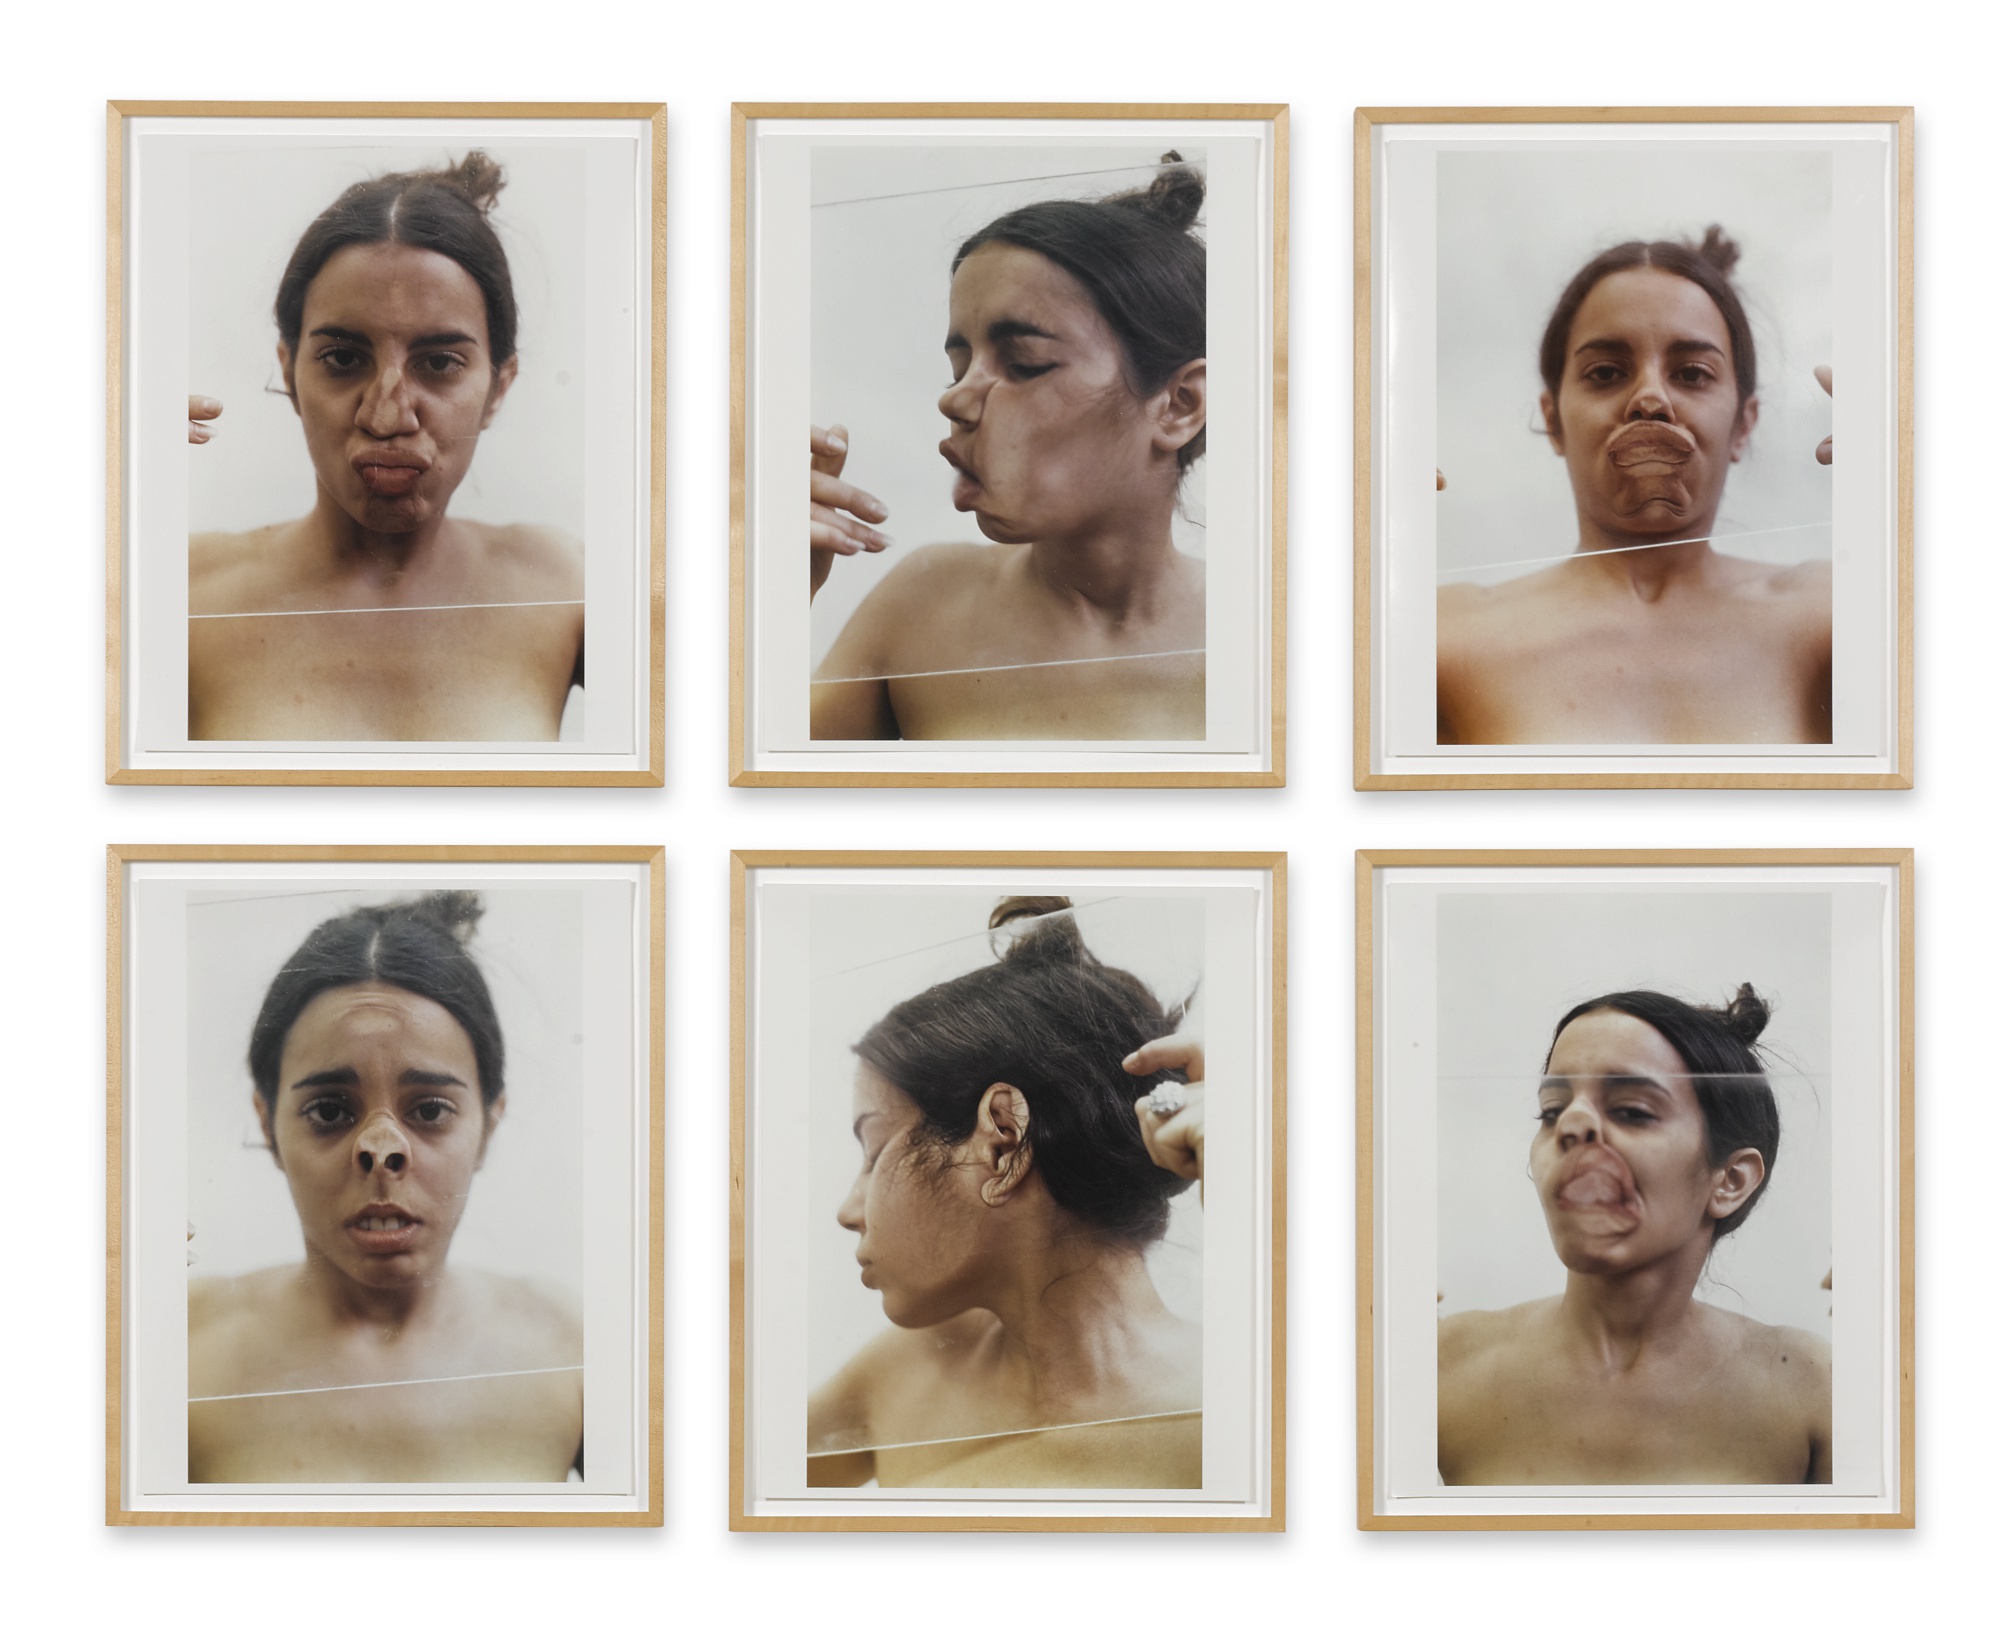 Ana Mendieta's Untitled (Glass on Body Imprints), 1972